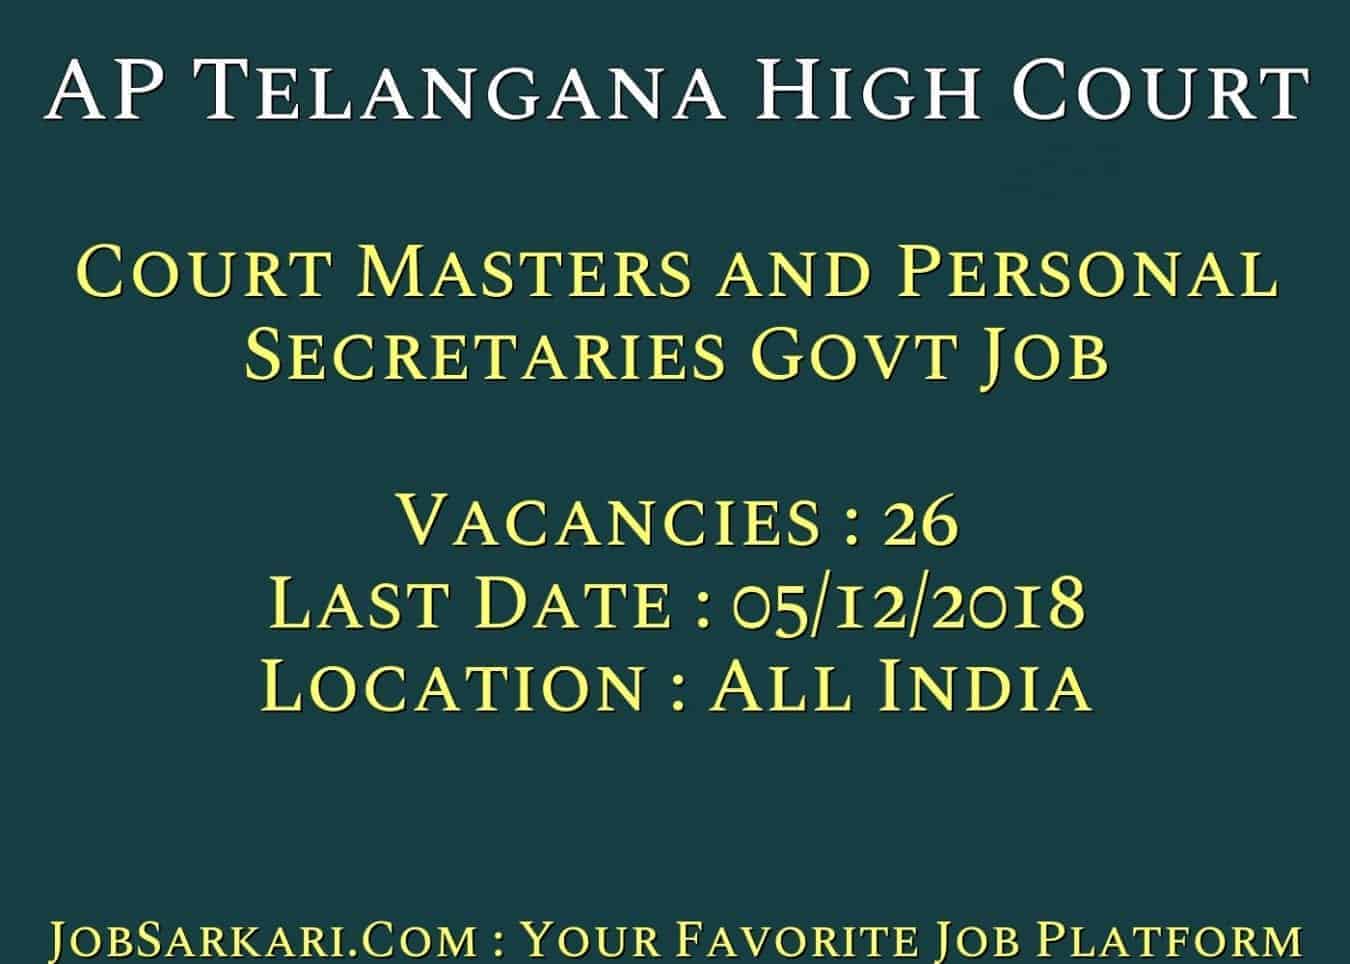 AP Telangana High Court Recruitment 2018 for Court Masters and Personal Secretaries Govt Job